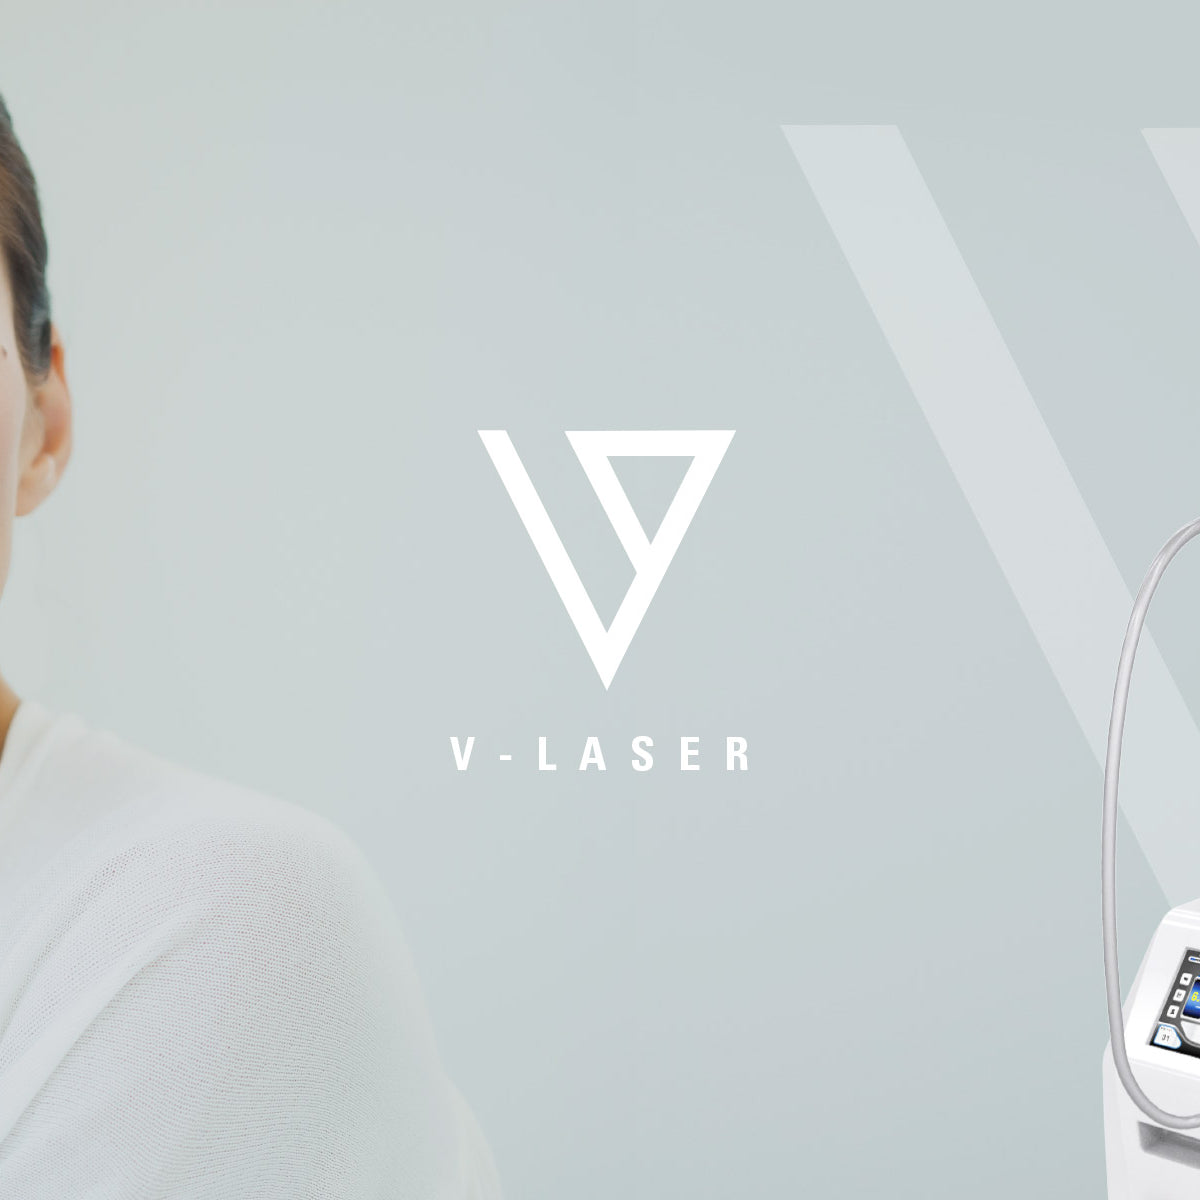 V Laser, vascular laser, remove veins, leg veins, spider veins, long pulse alexandrite laser, vascular laser